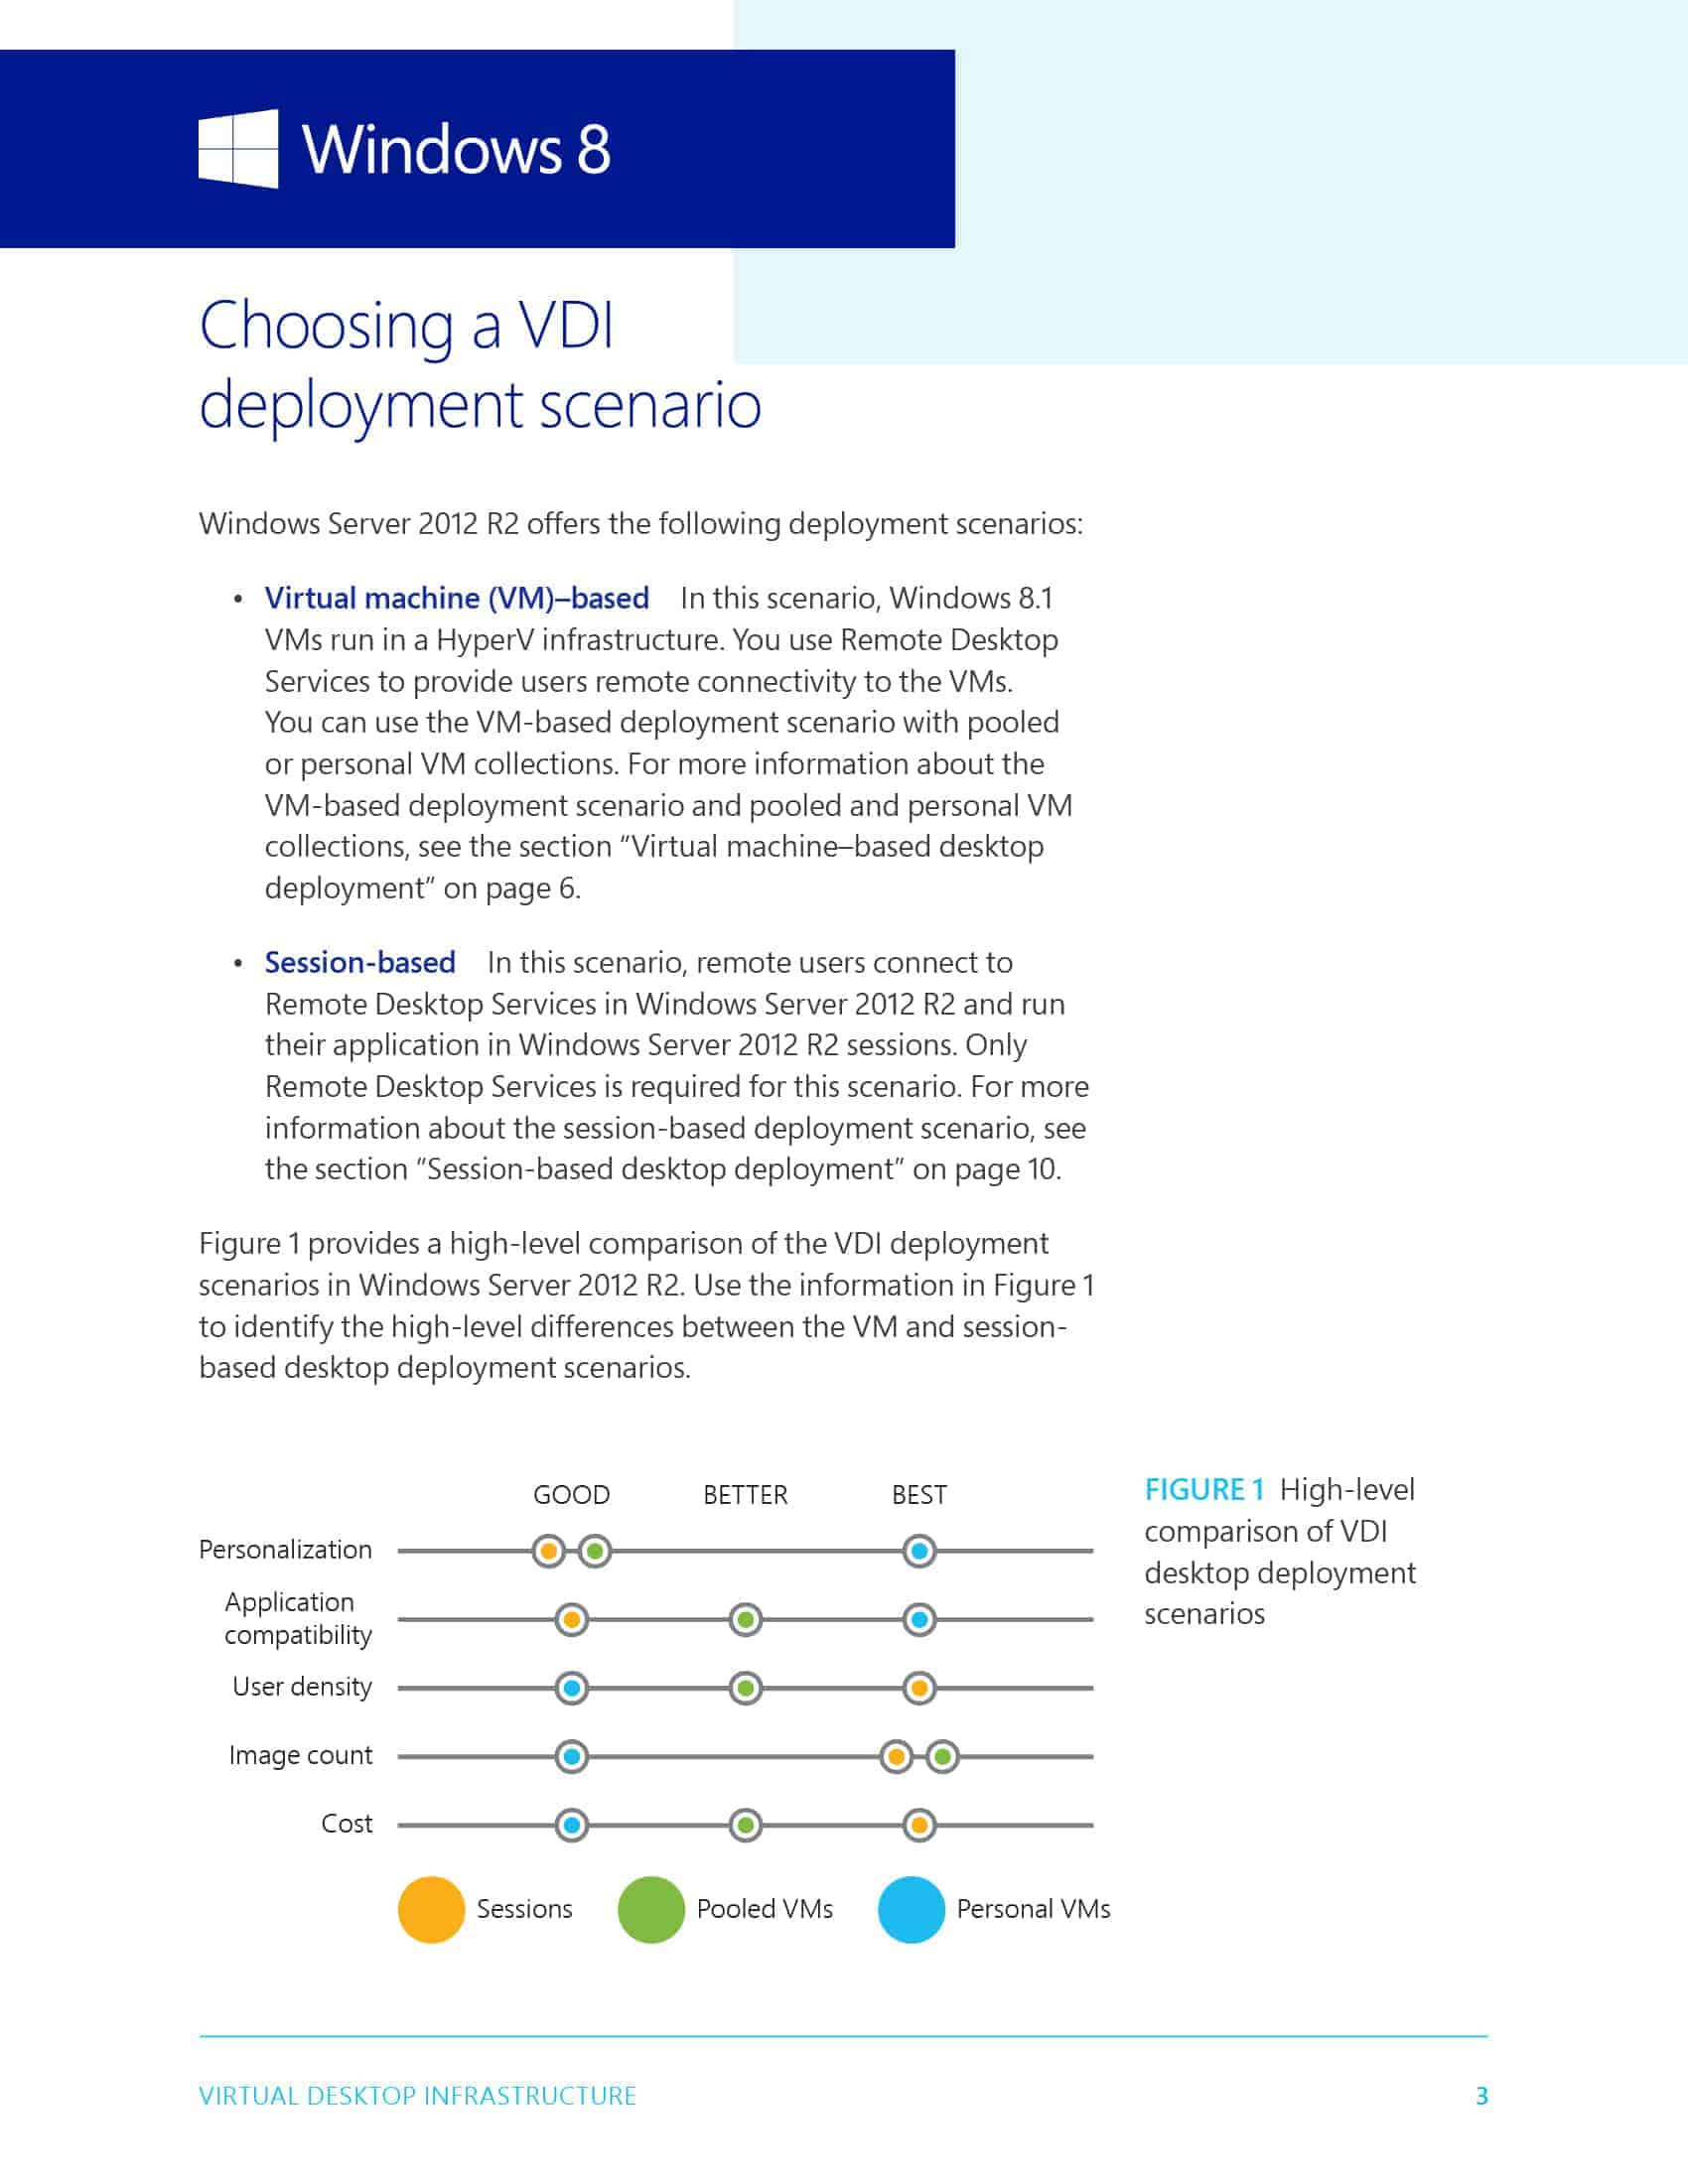 Virtual Desktop Infrastructure (VDI) brief